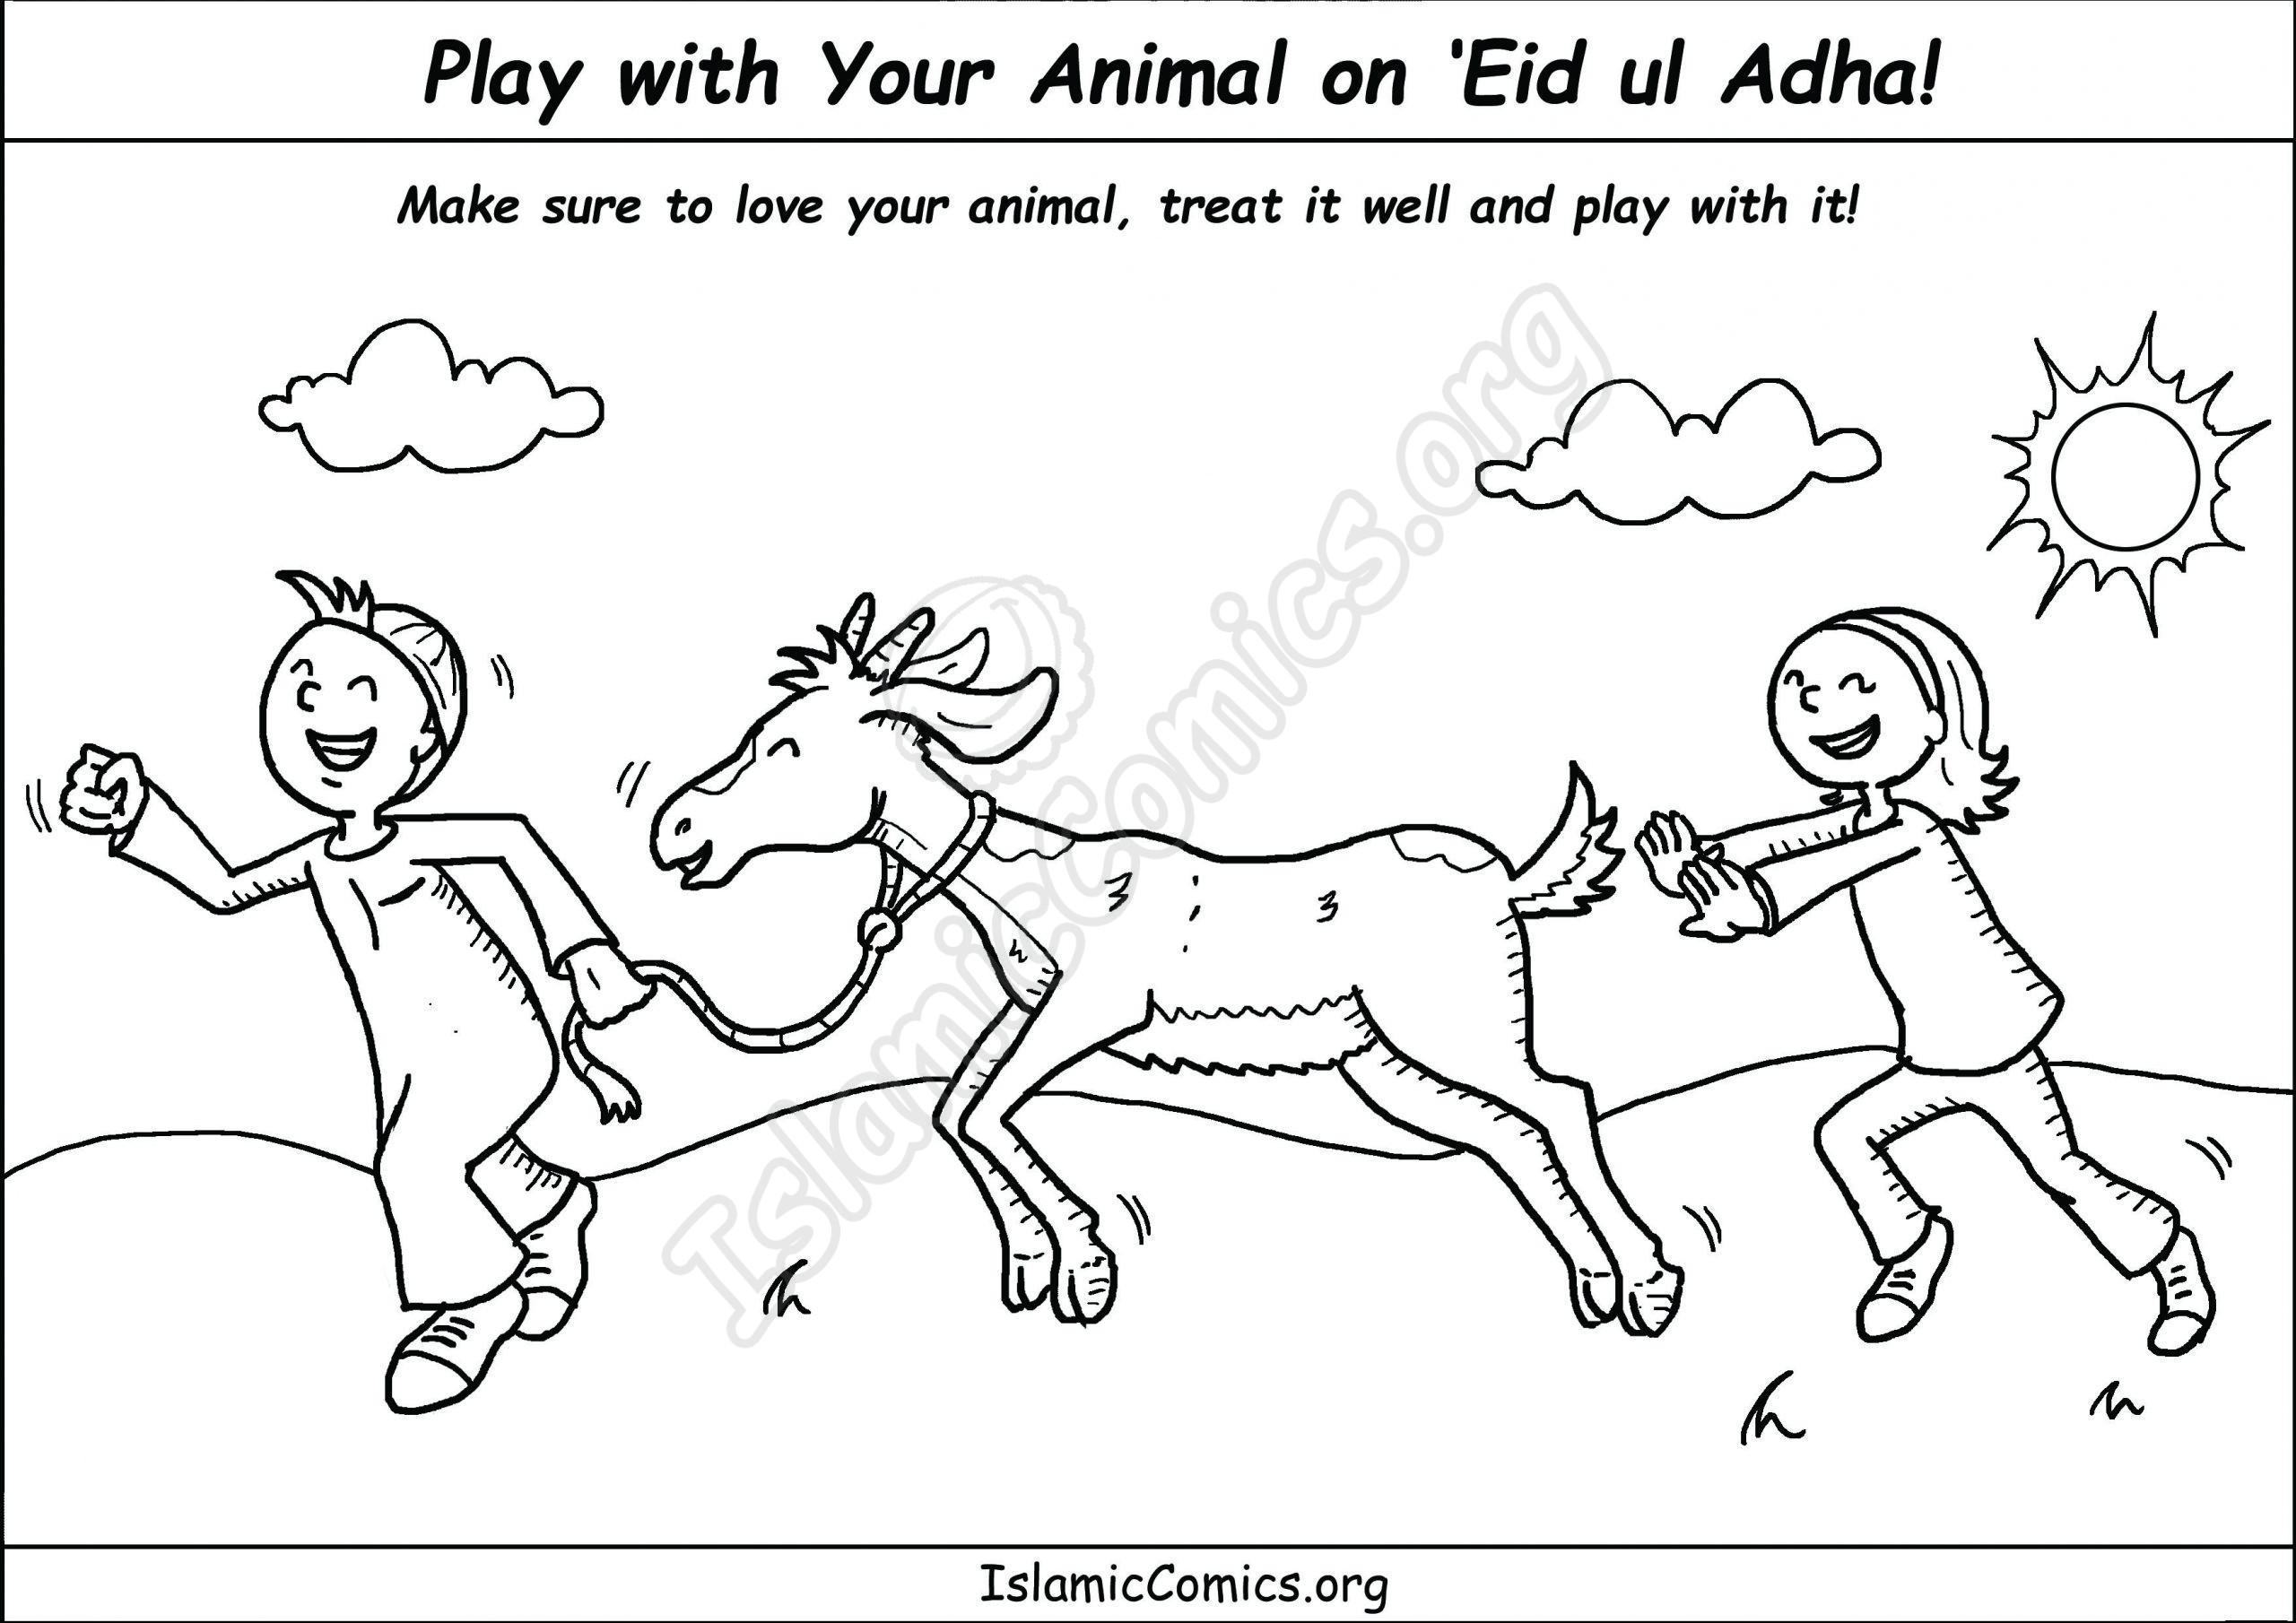 Treat Your Animal Well Before 'Eid ul Adha